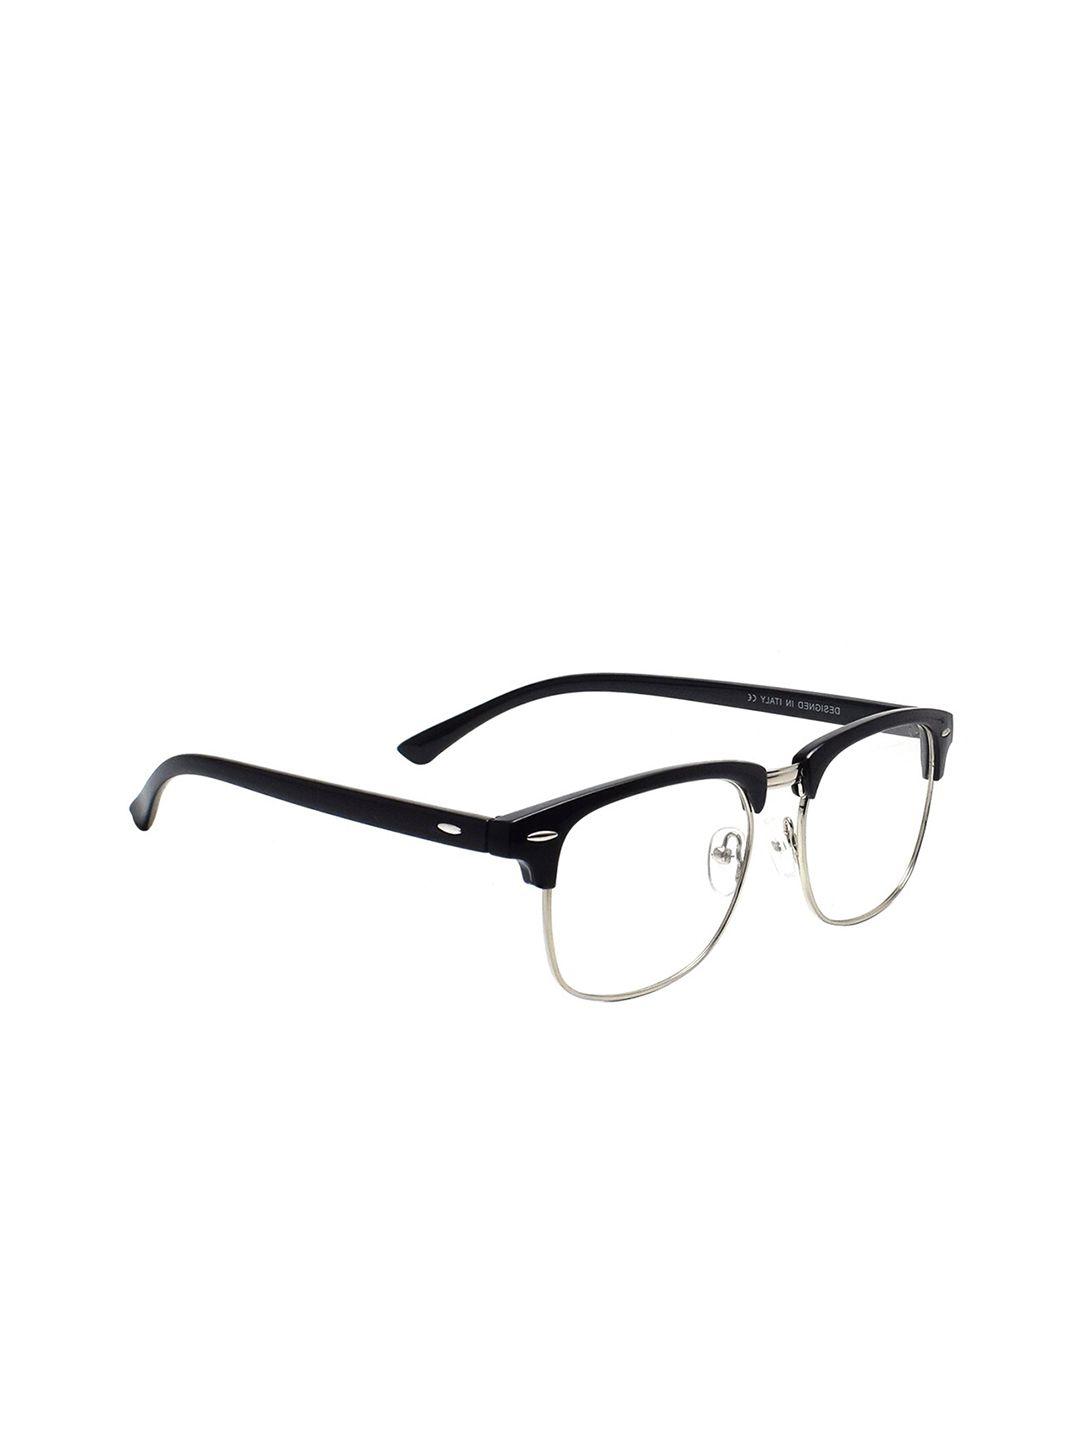 peter jones eyewear unisex black half rim computer glasses square frames 2092b